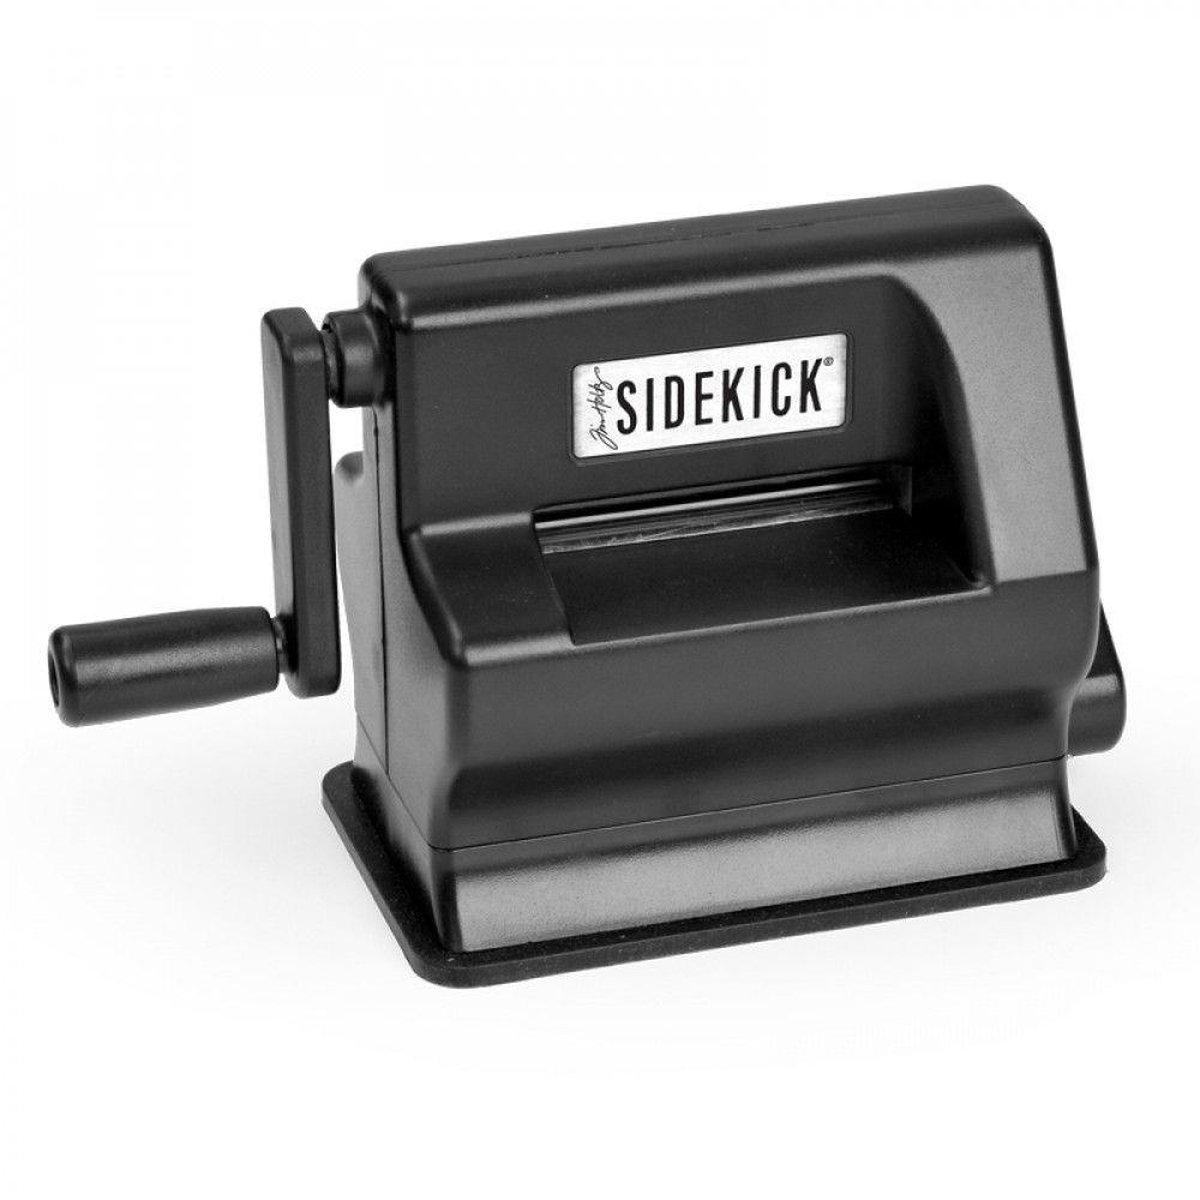 Sizzix Sidekick - Mini Die Cutting and Embossing Machine - Black